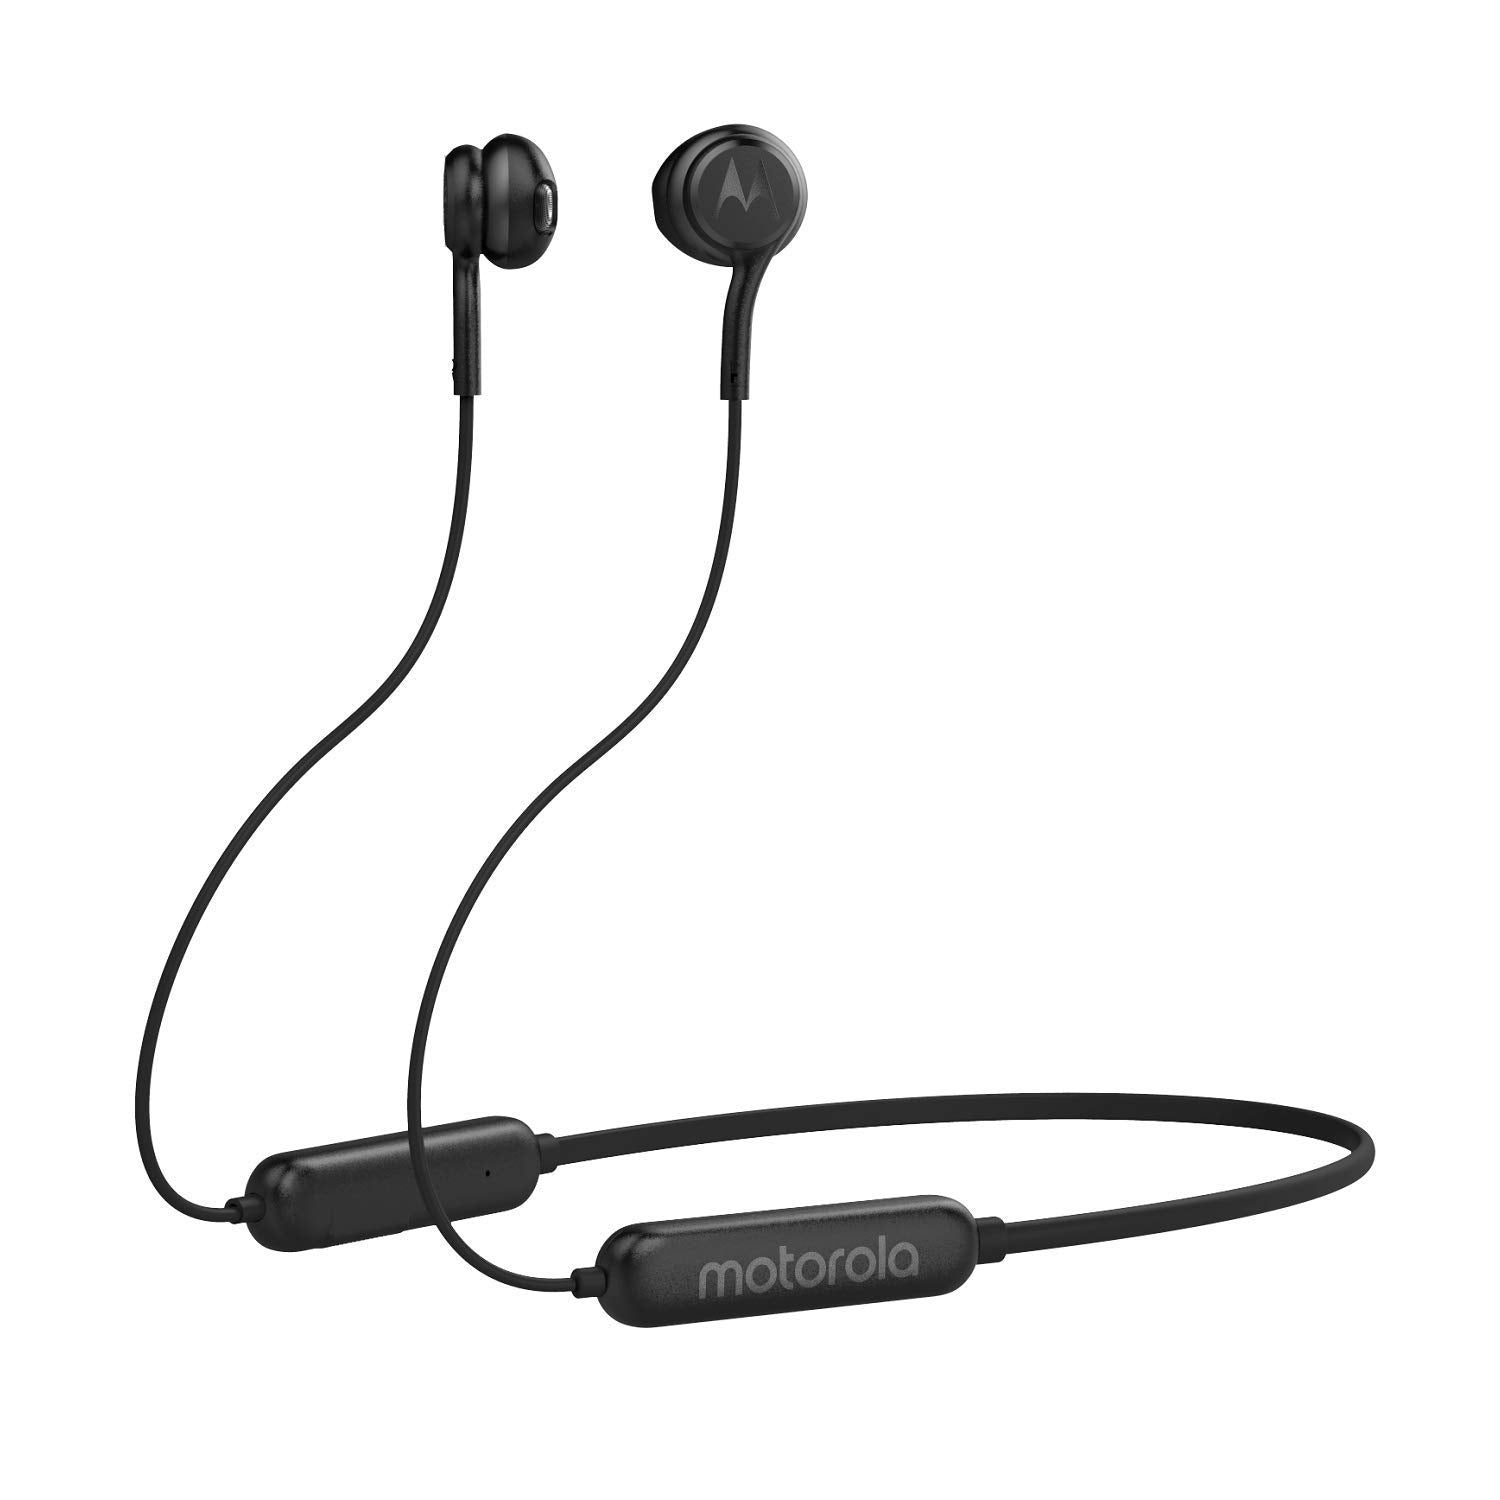 Open Box, Unused Motorola Lifestyle Ververap 105 Wireless Bluetooth in Ear Neckband Headphone with Mic (Black)